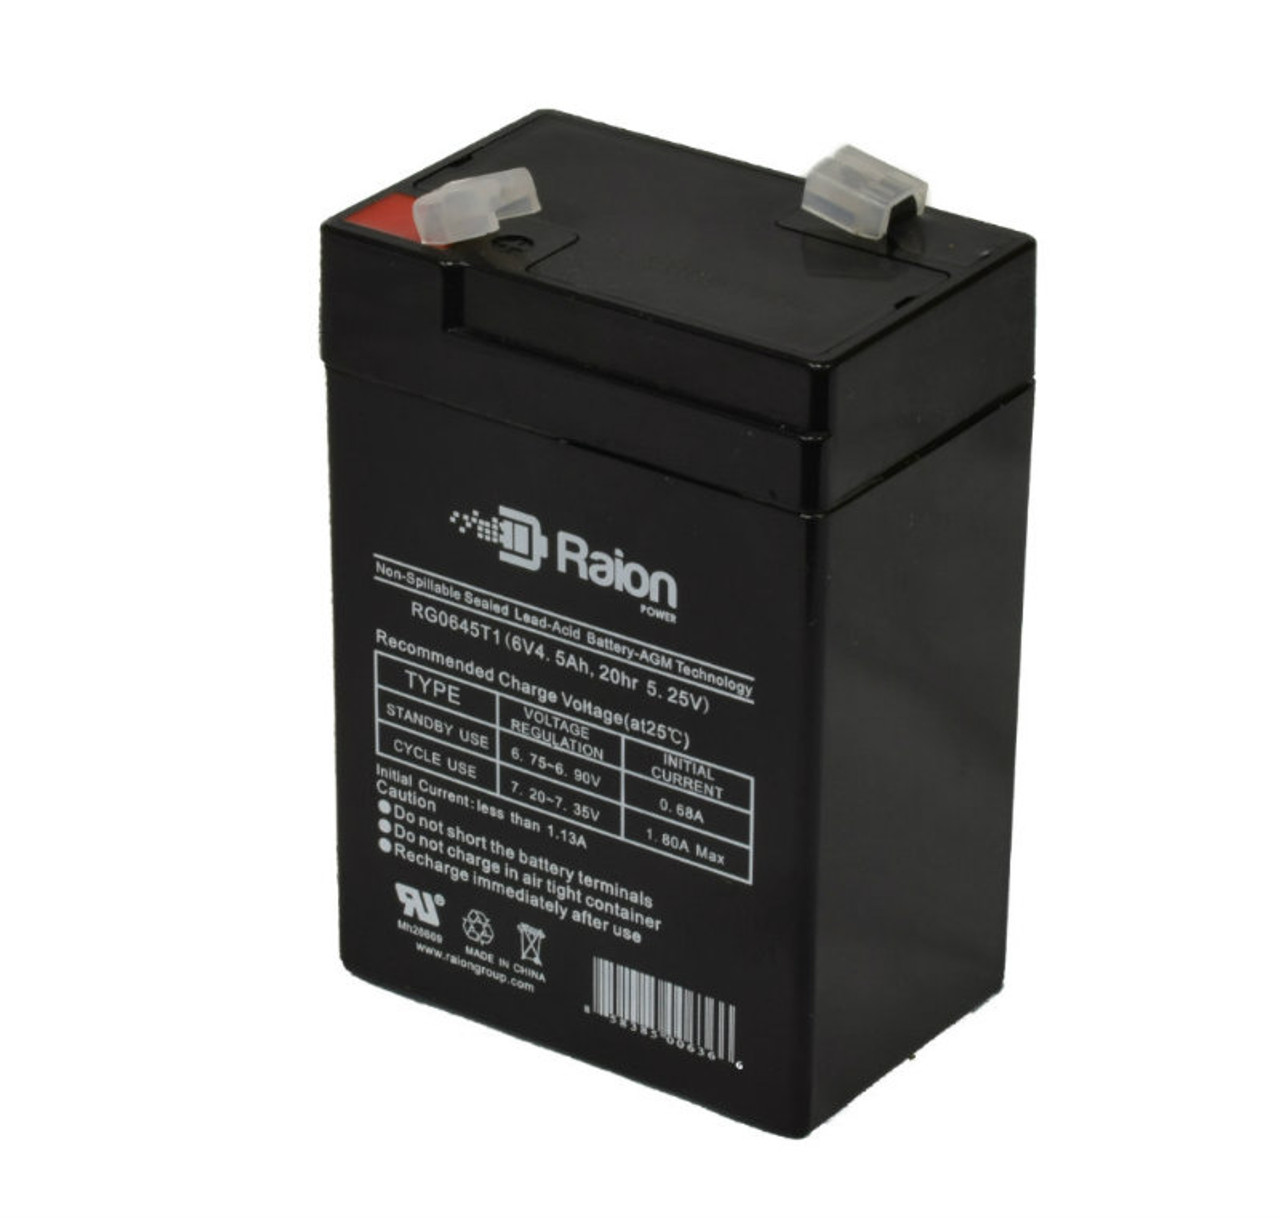 Raion Power RG0645T1 6V 4.5Ah Replacement Battery Cartridge for CBB NP5-6